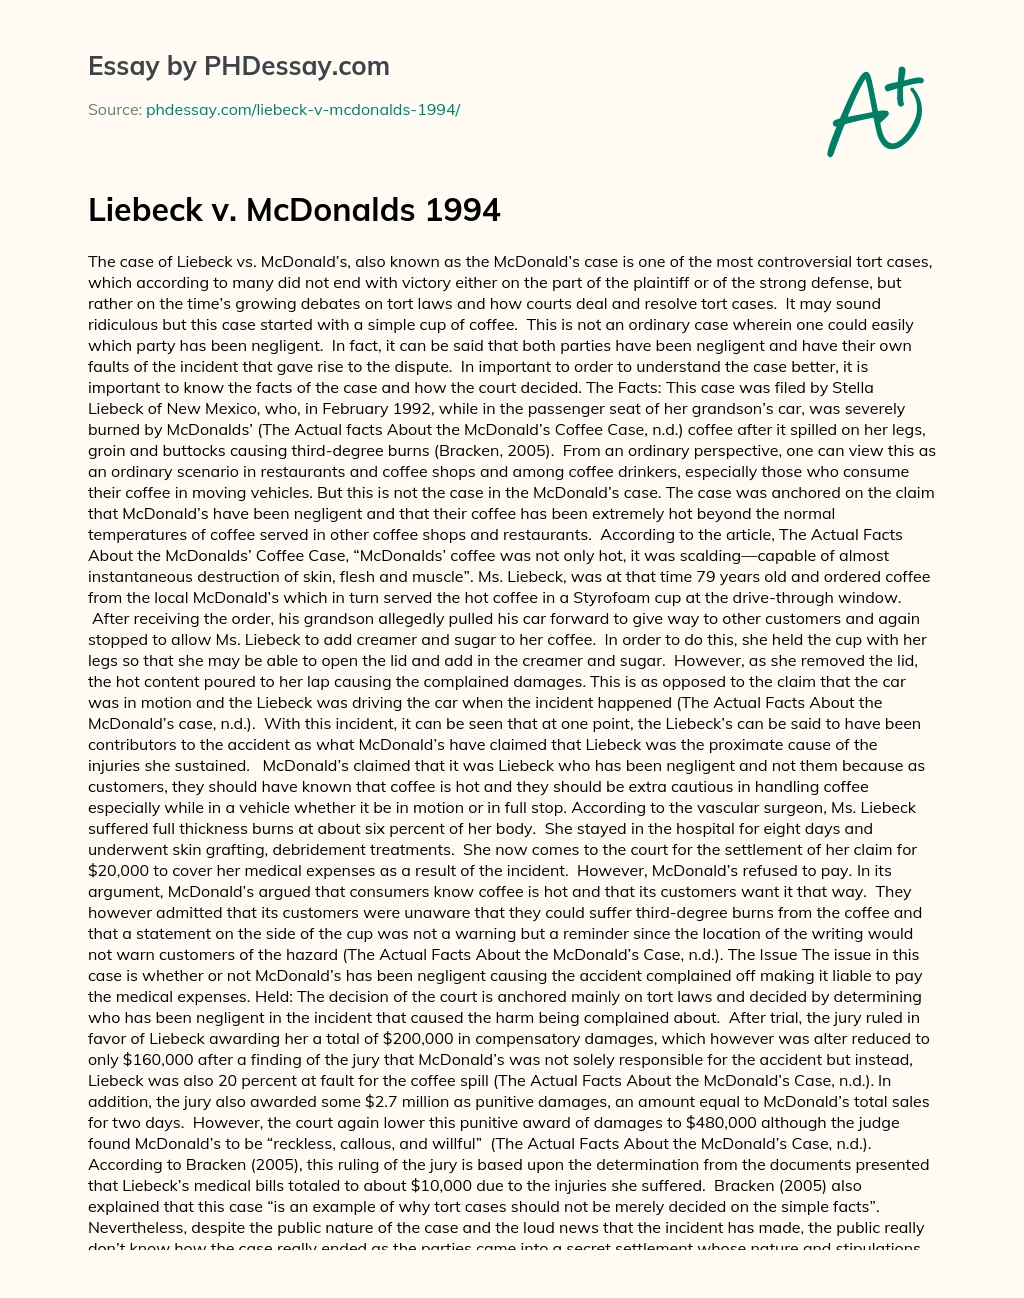 Liebeck v. McDonalds 1994 essay